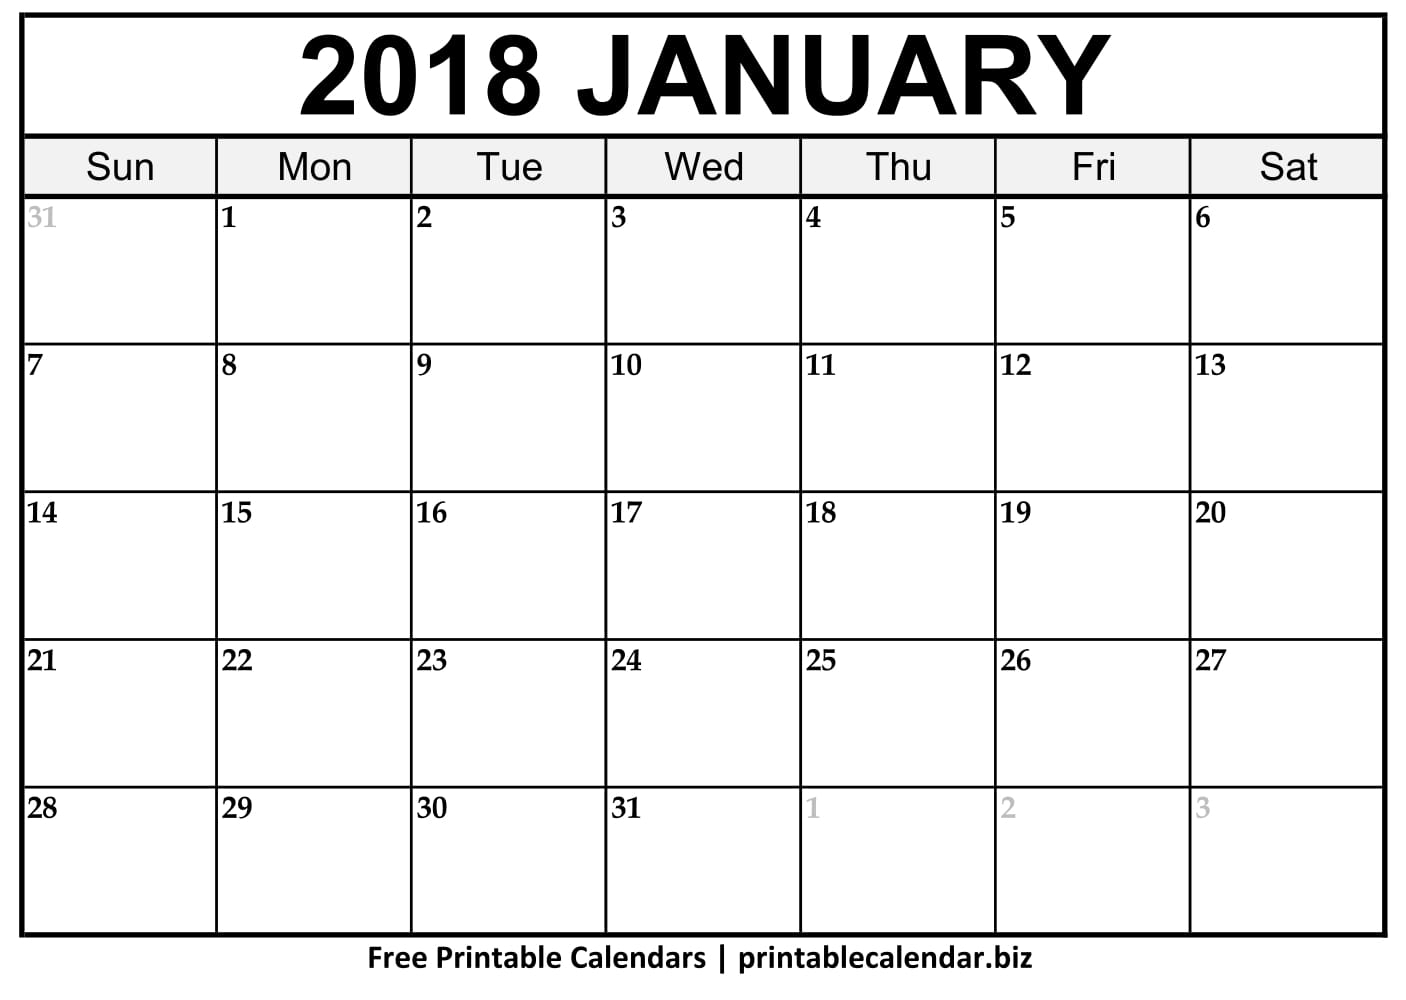 2019 Printable Calendar Templates - Printablecalendar.biz